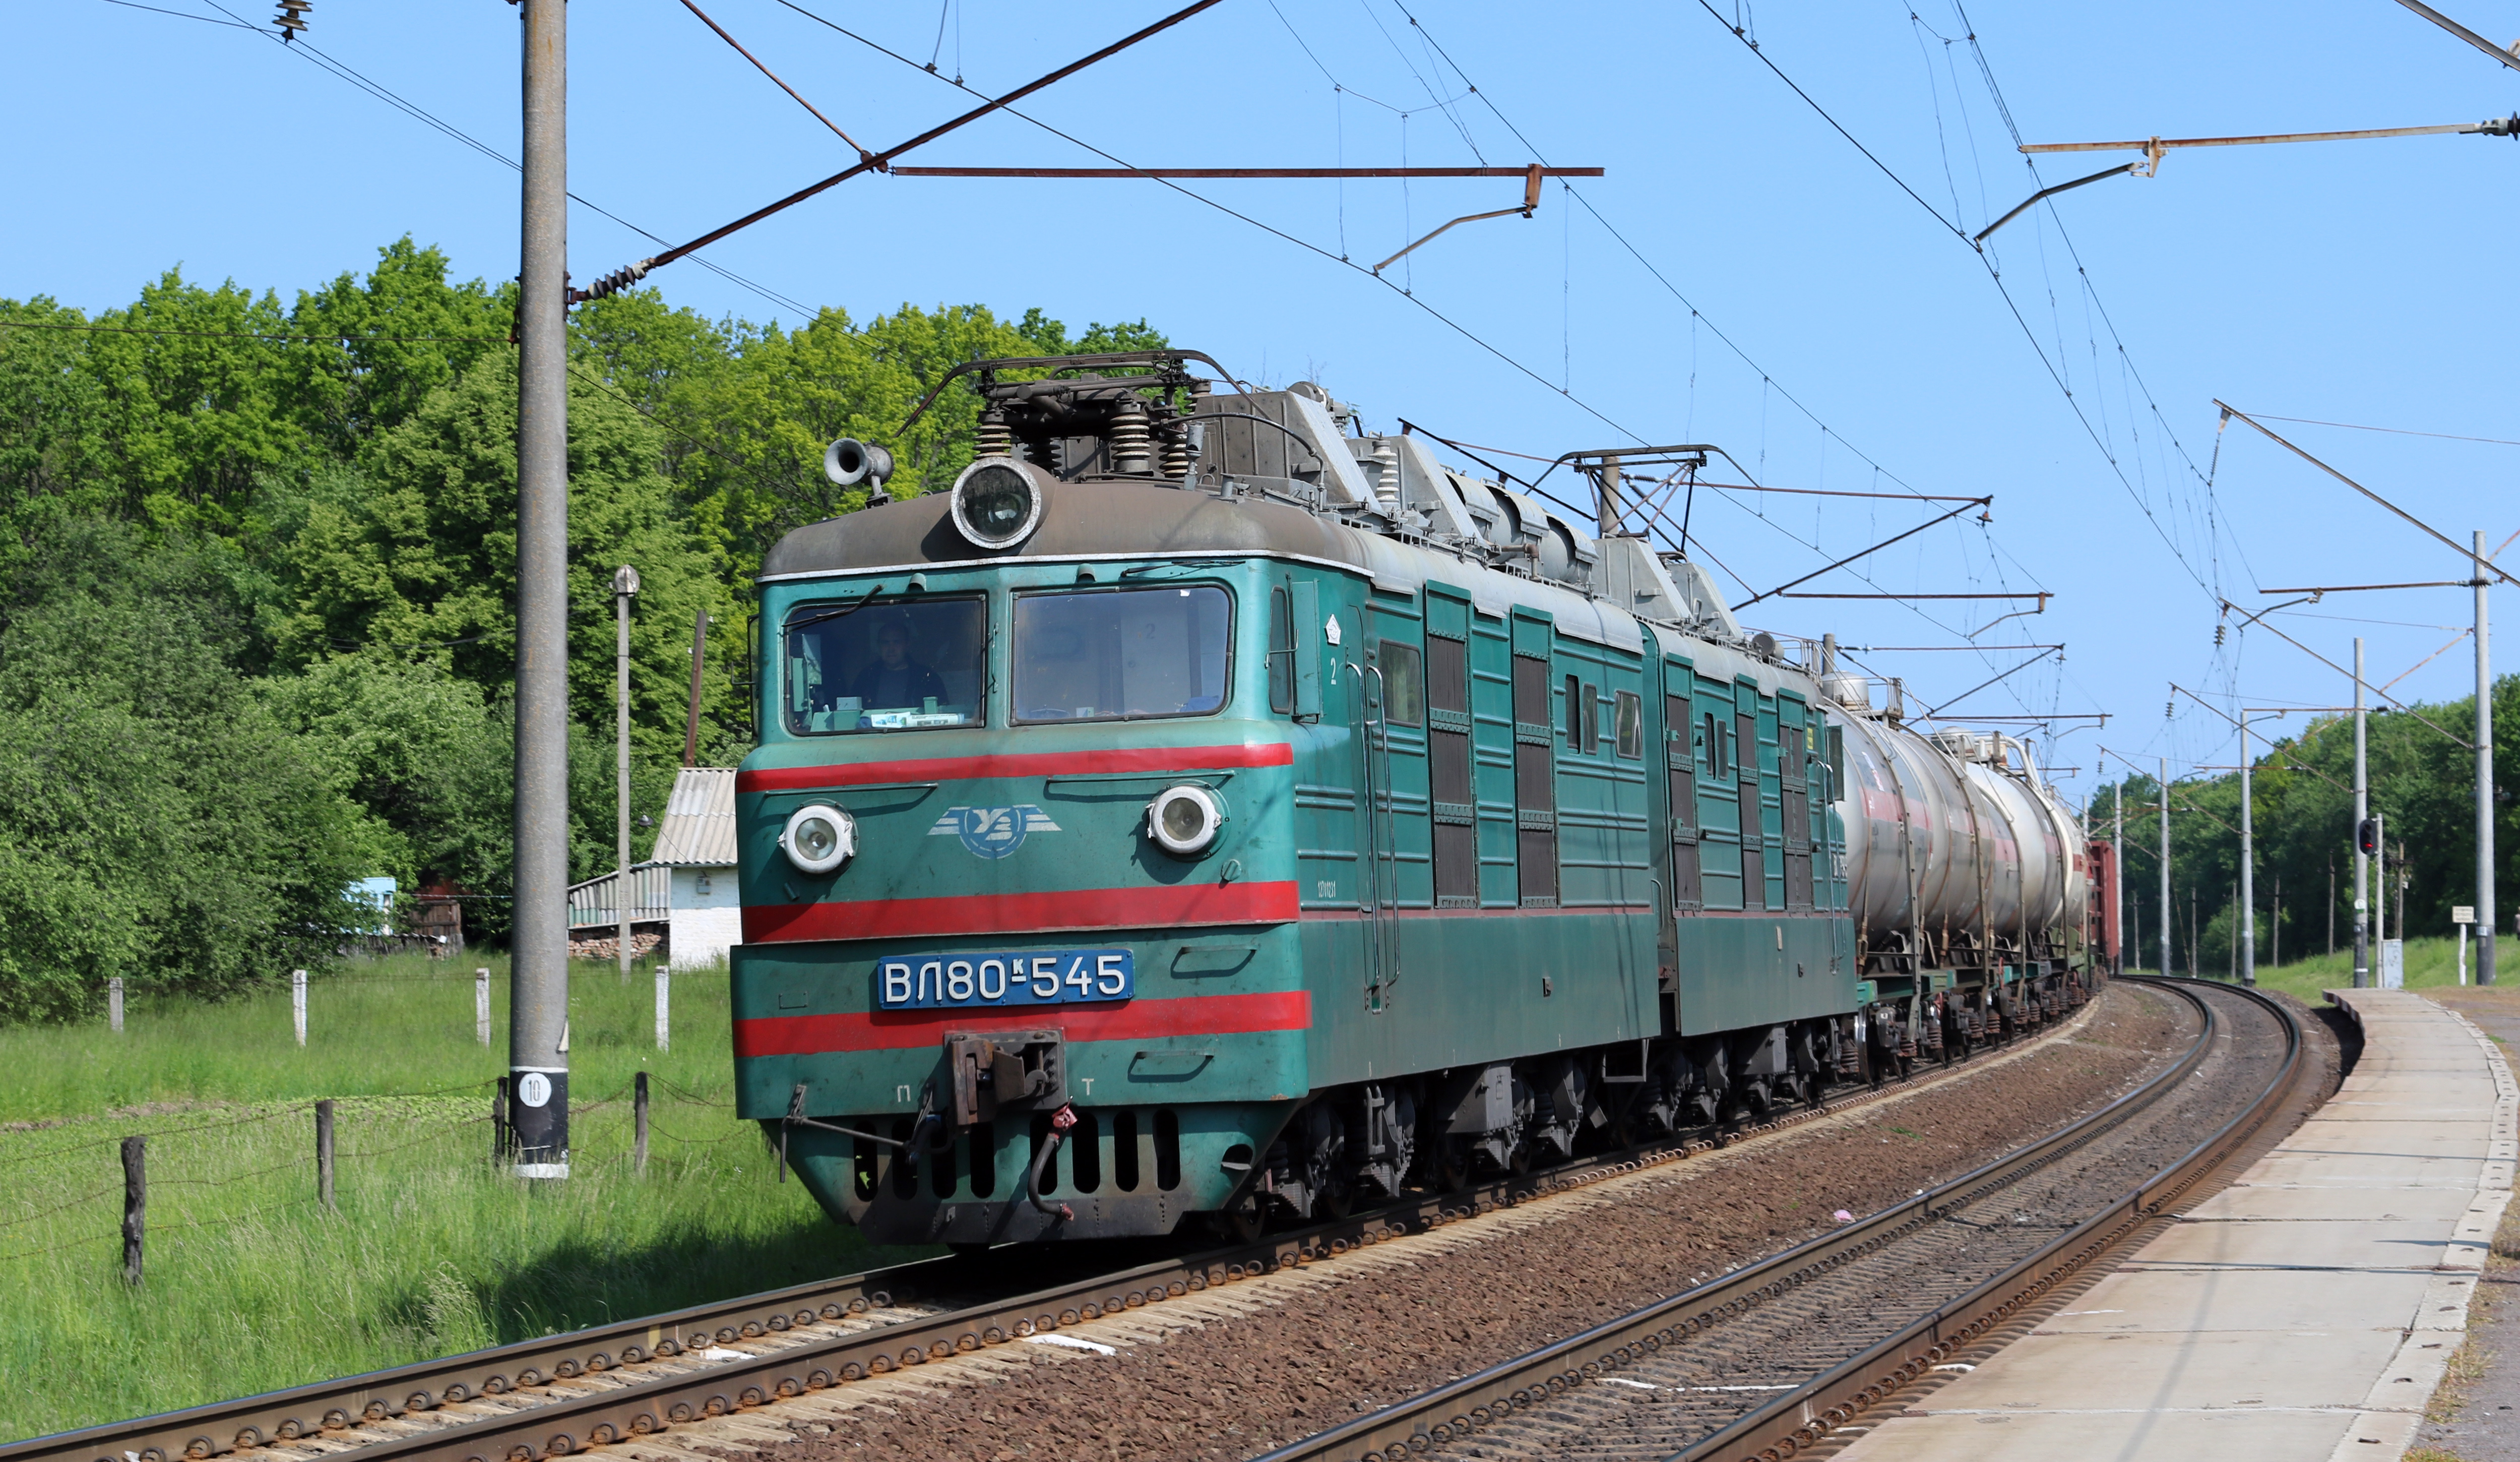 Locomotive VL80K-545 2016 G1